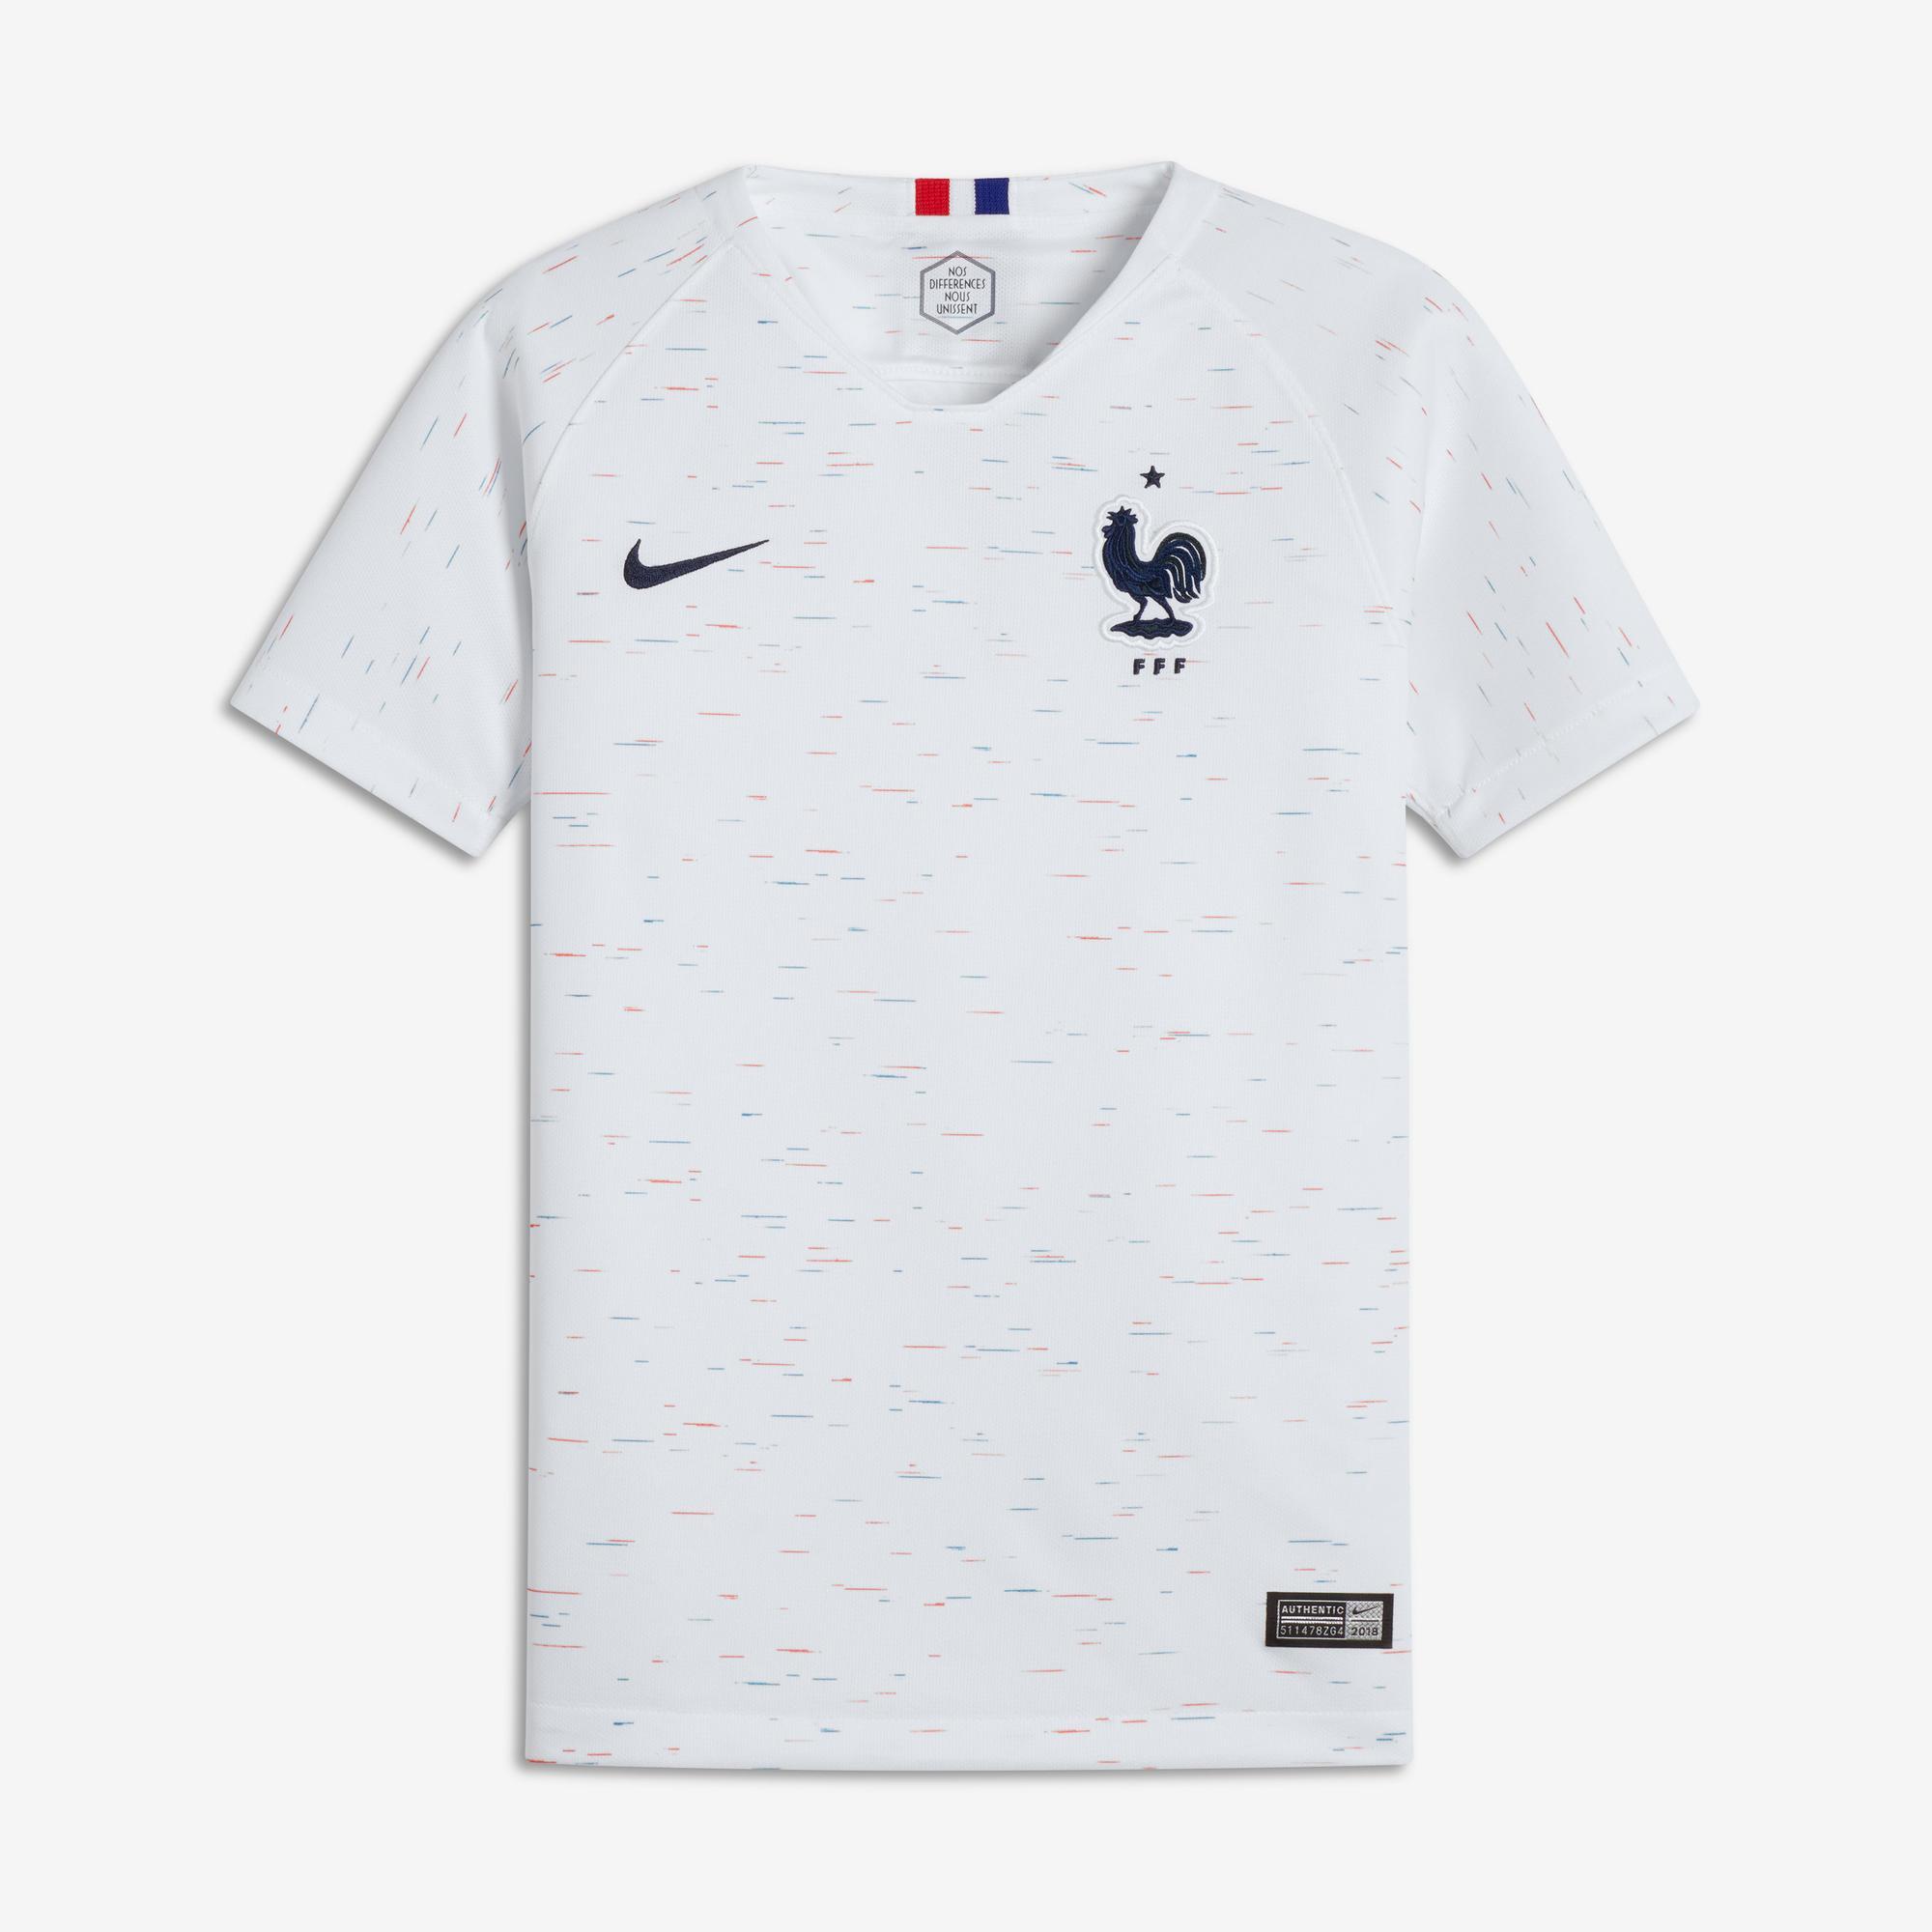 Camiseta Francia Nike Visitante 2018 niños NIKE | Black Friday Decathlon  2020